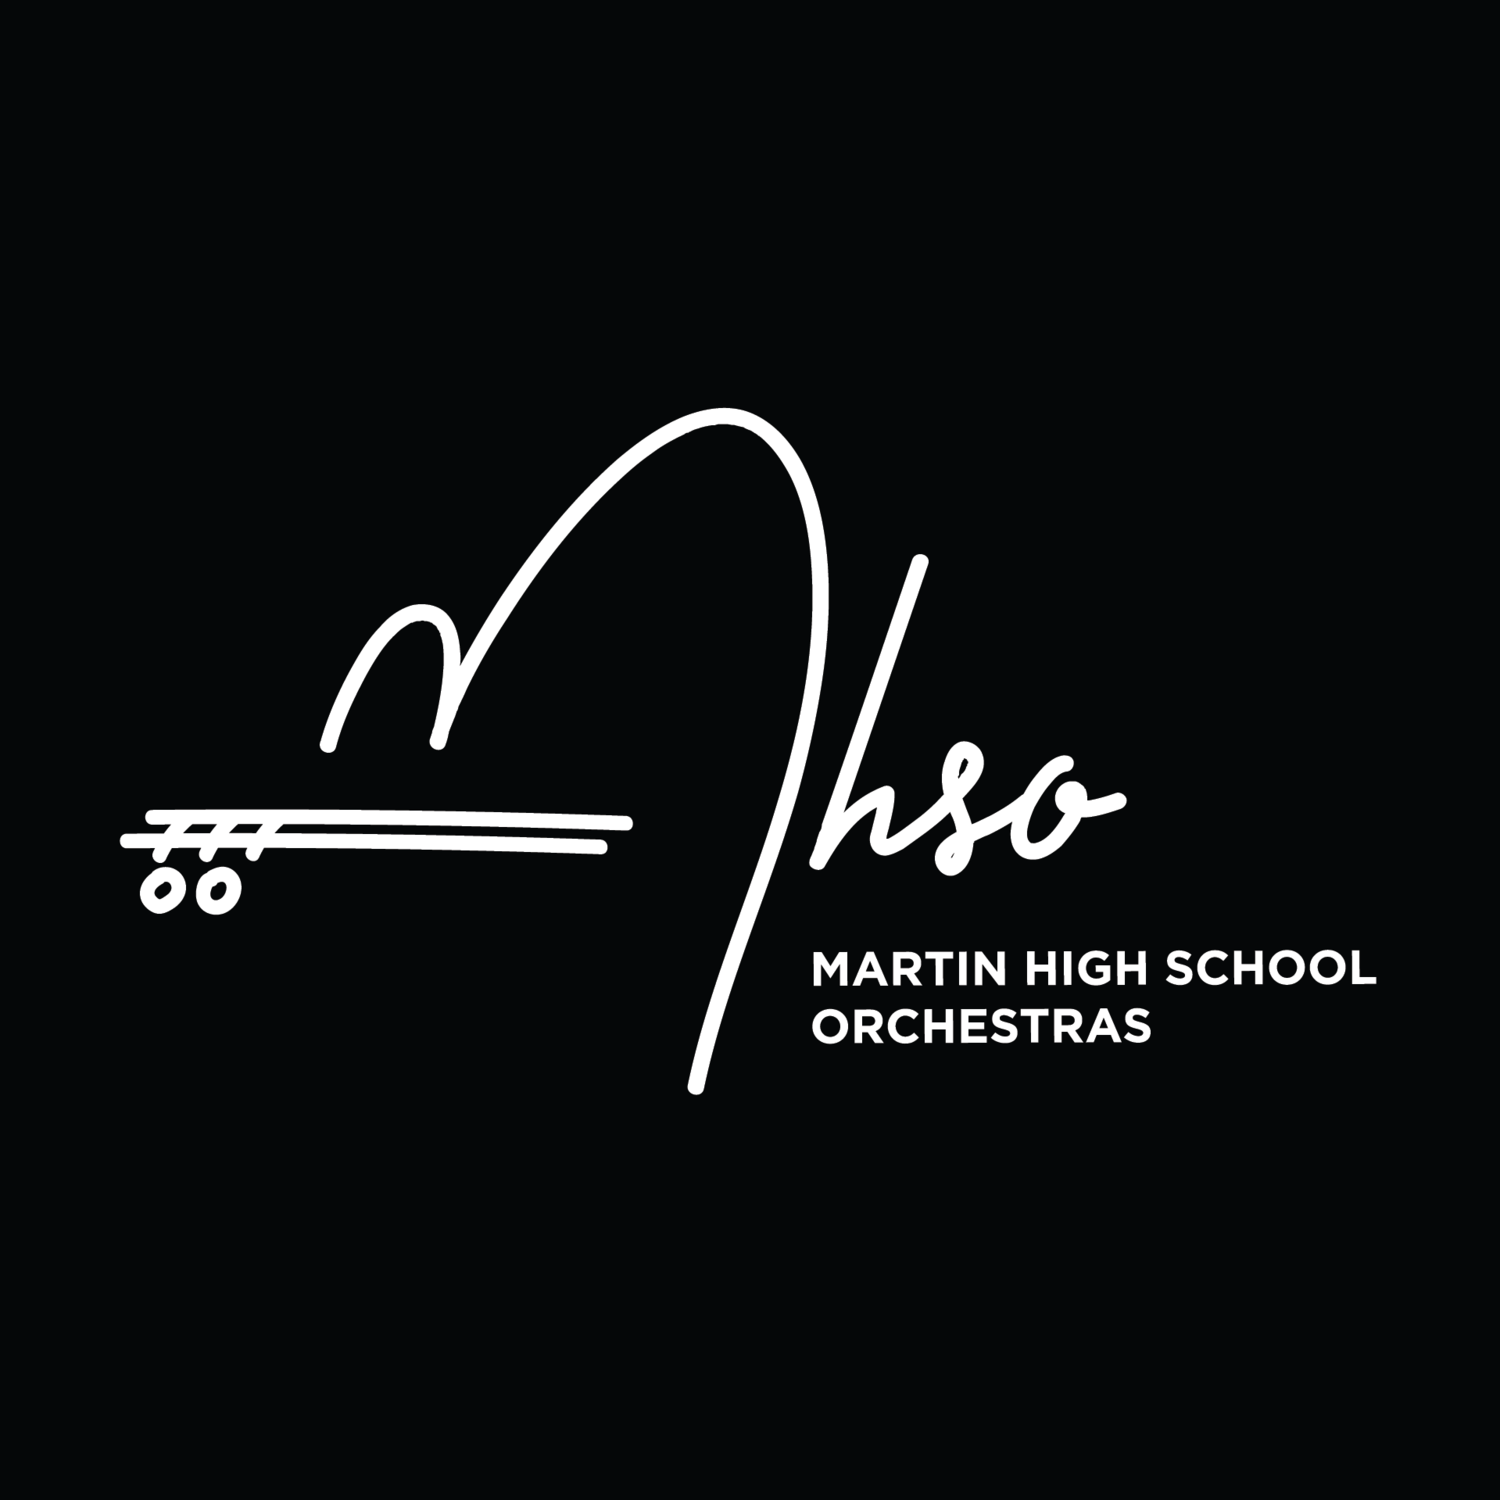 Martin High School Orchestra